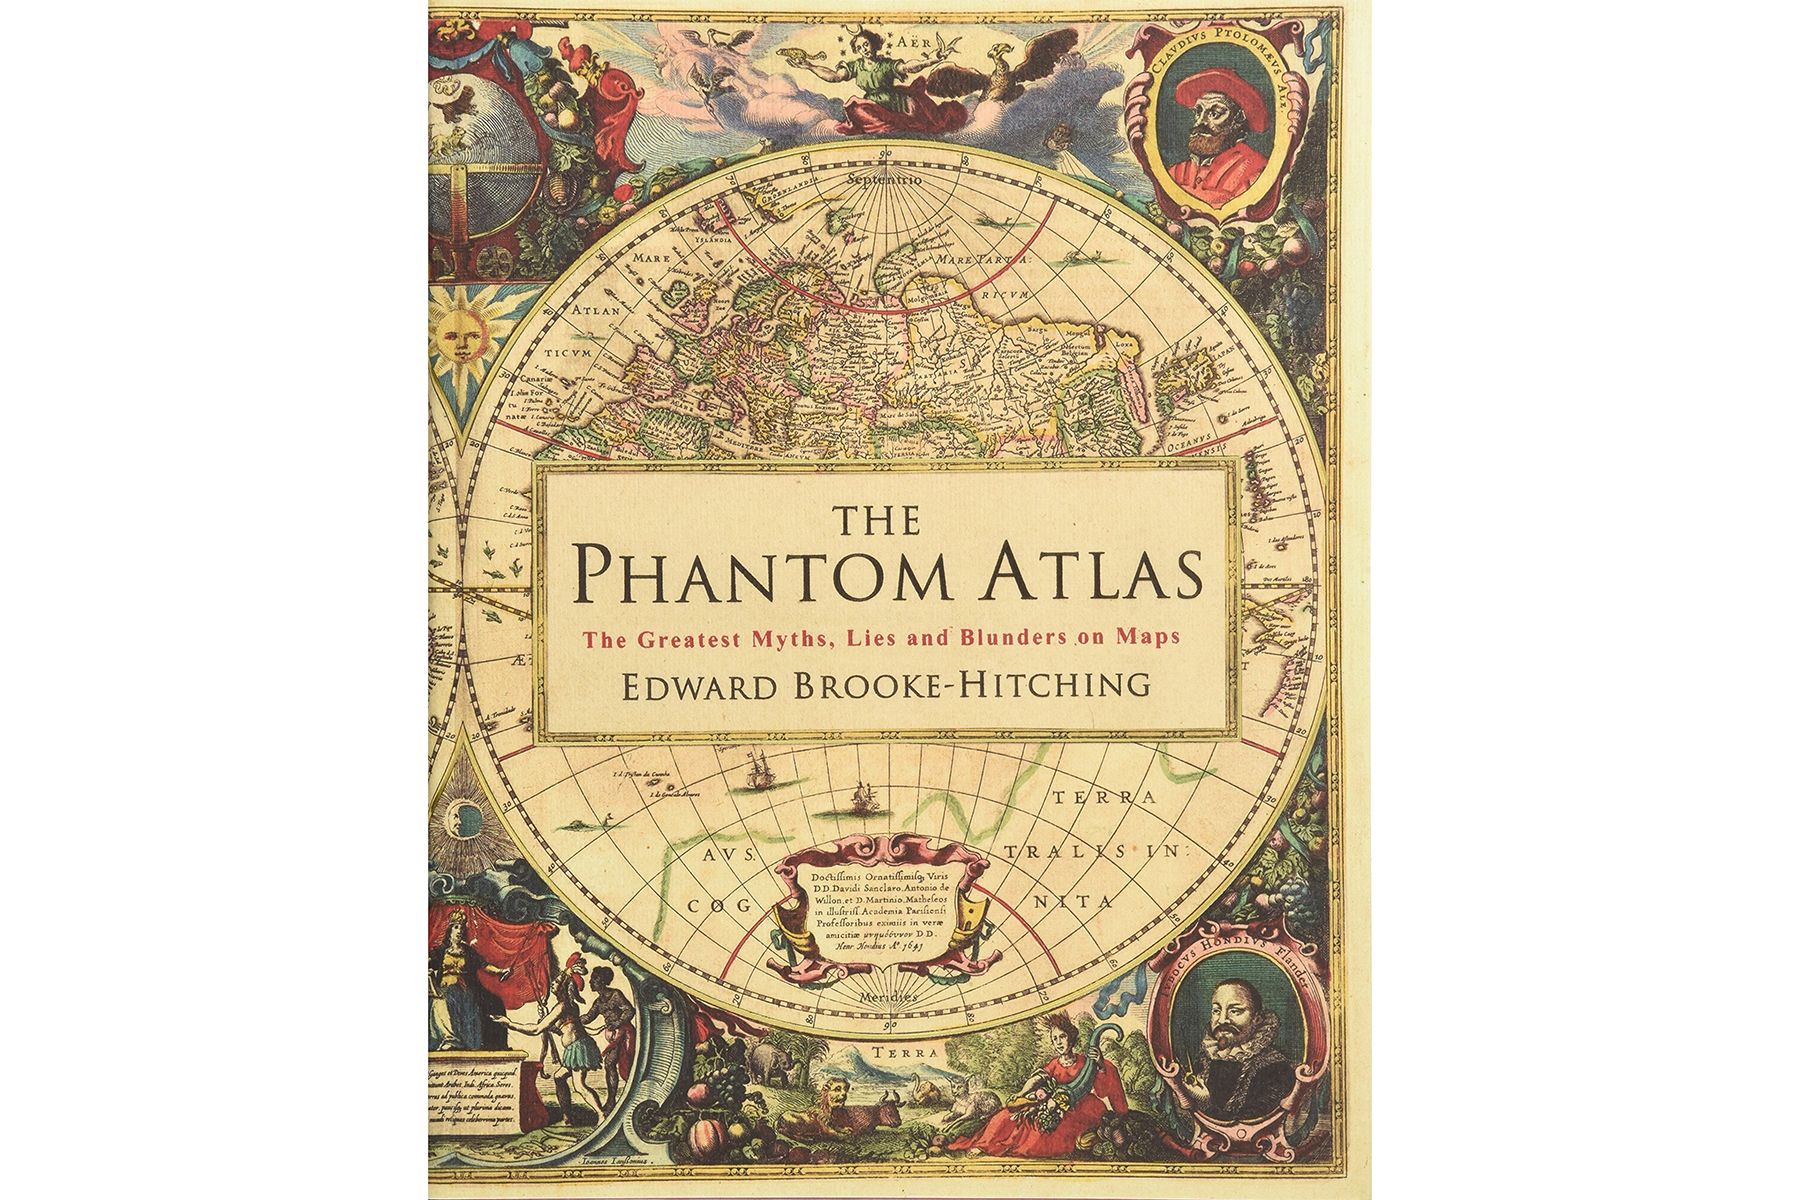 Naslovnica Fantomskog atlasa, Edwarda Brooke-Hitchinga